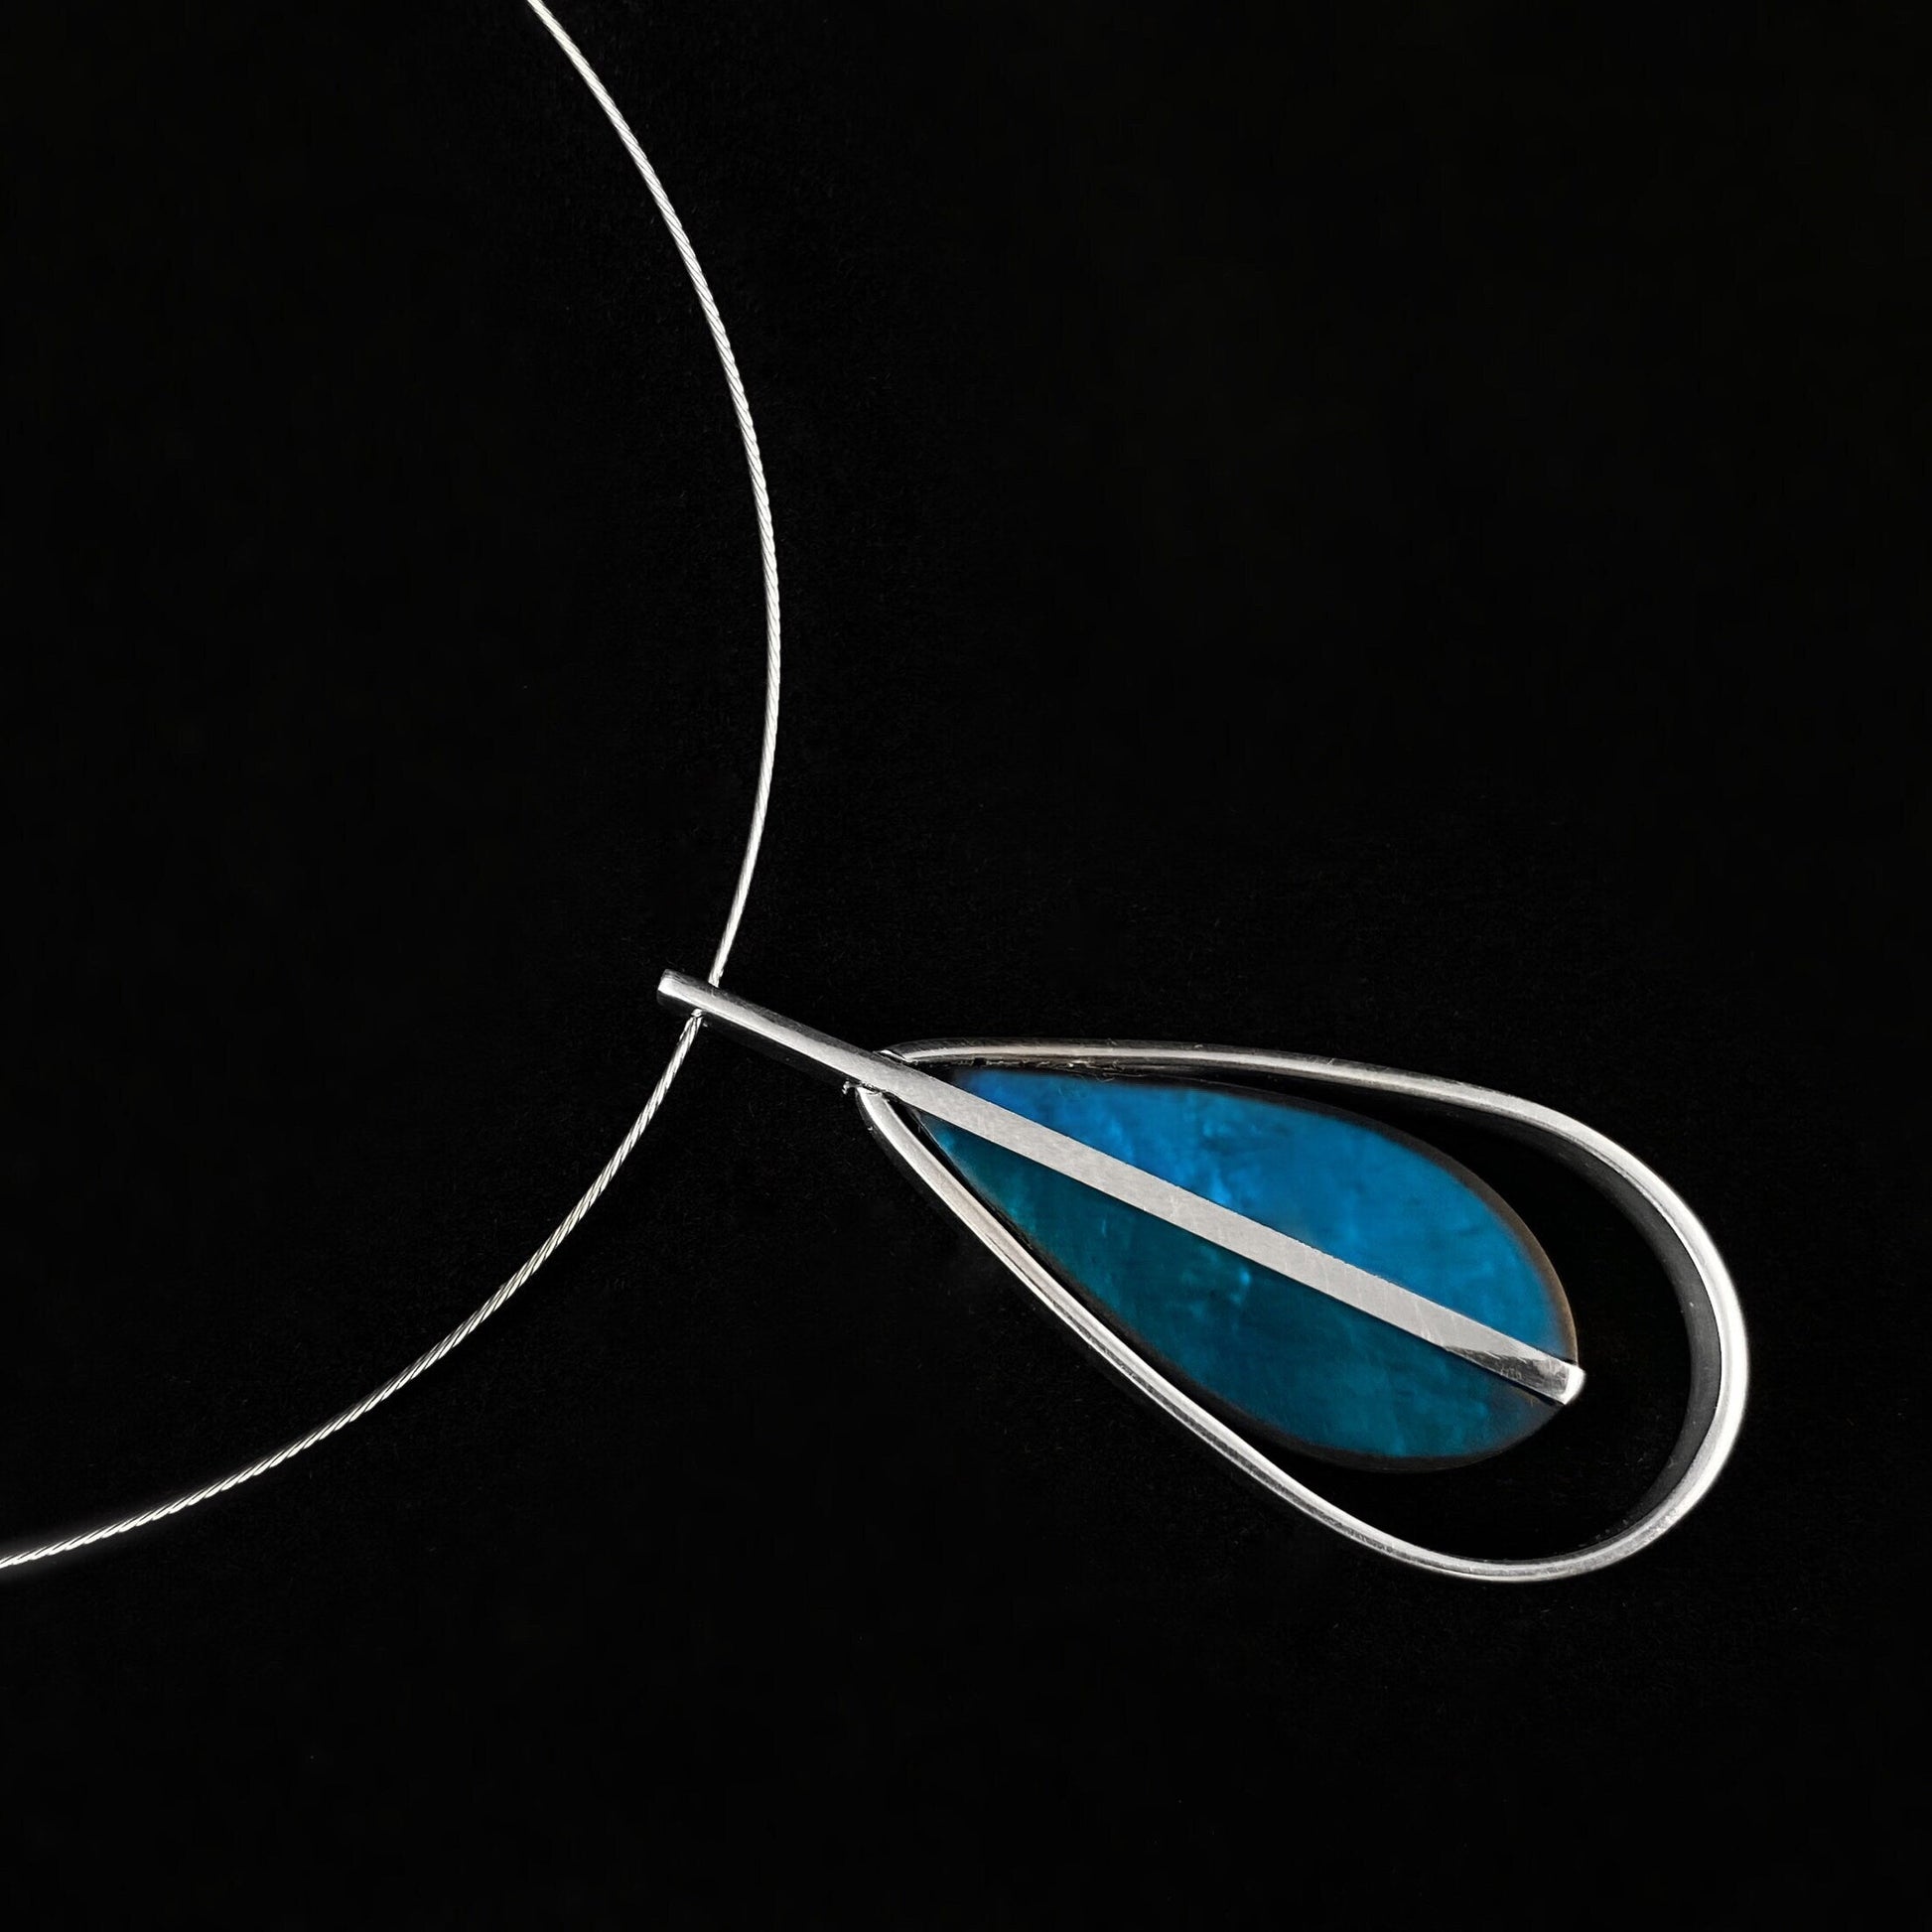 Handmade Resin and Shell Two Tone Sea Blue Teardrop Pendant Necklace, Hypoallergenic - Origin